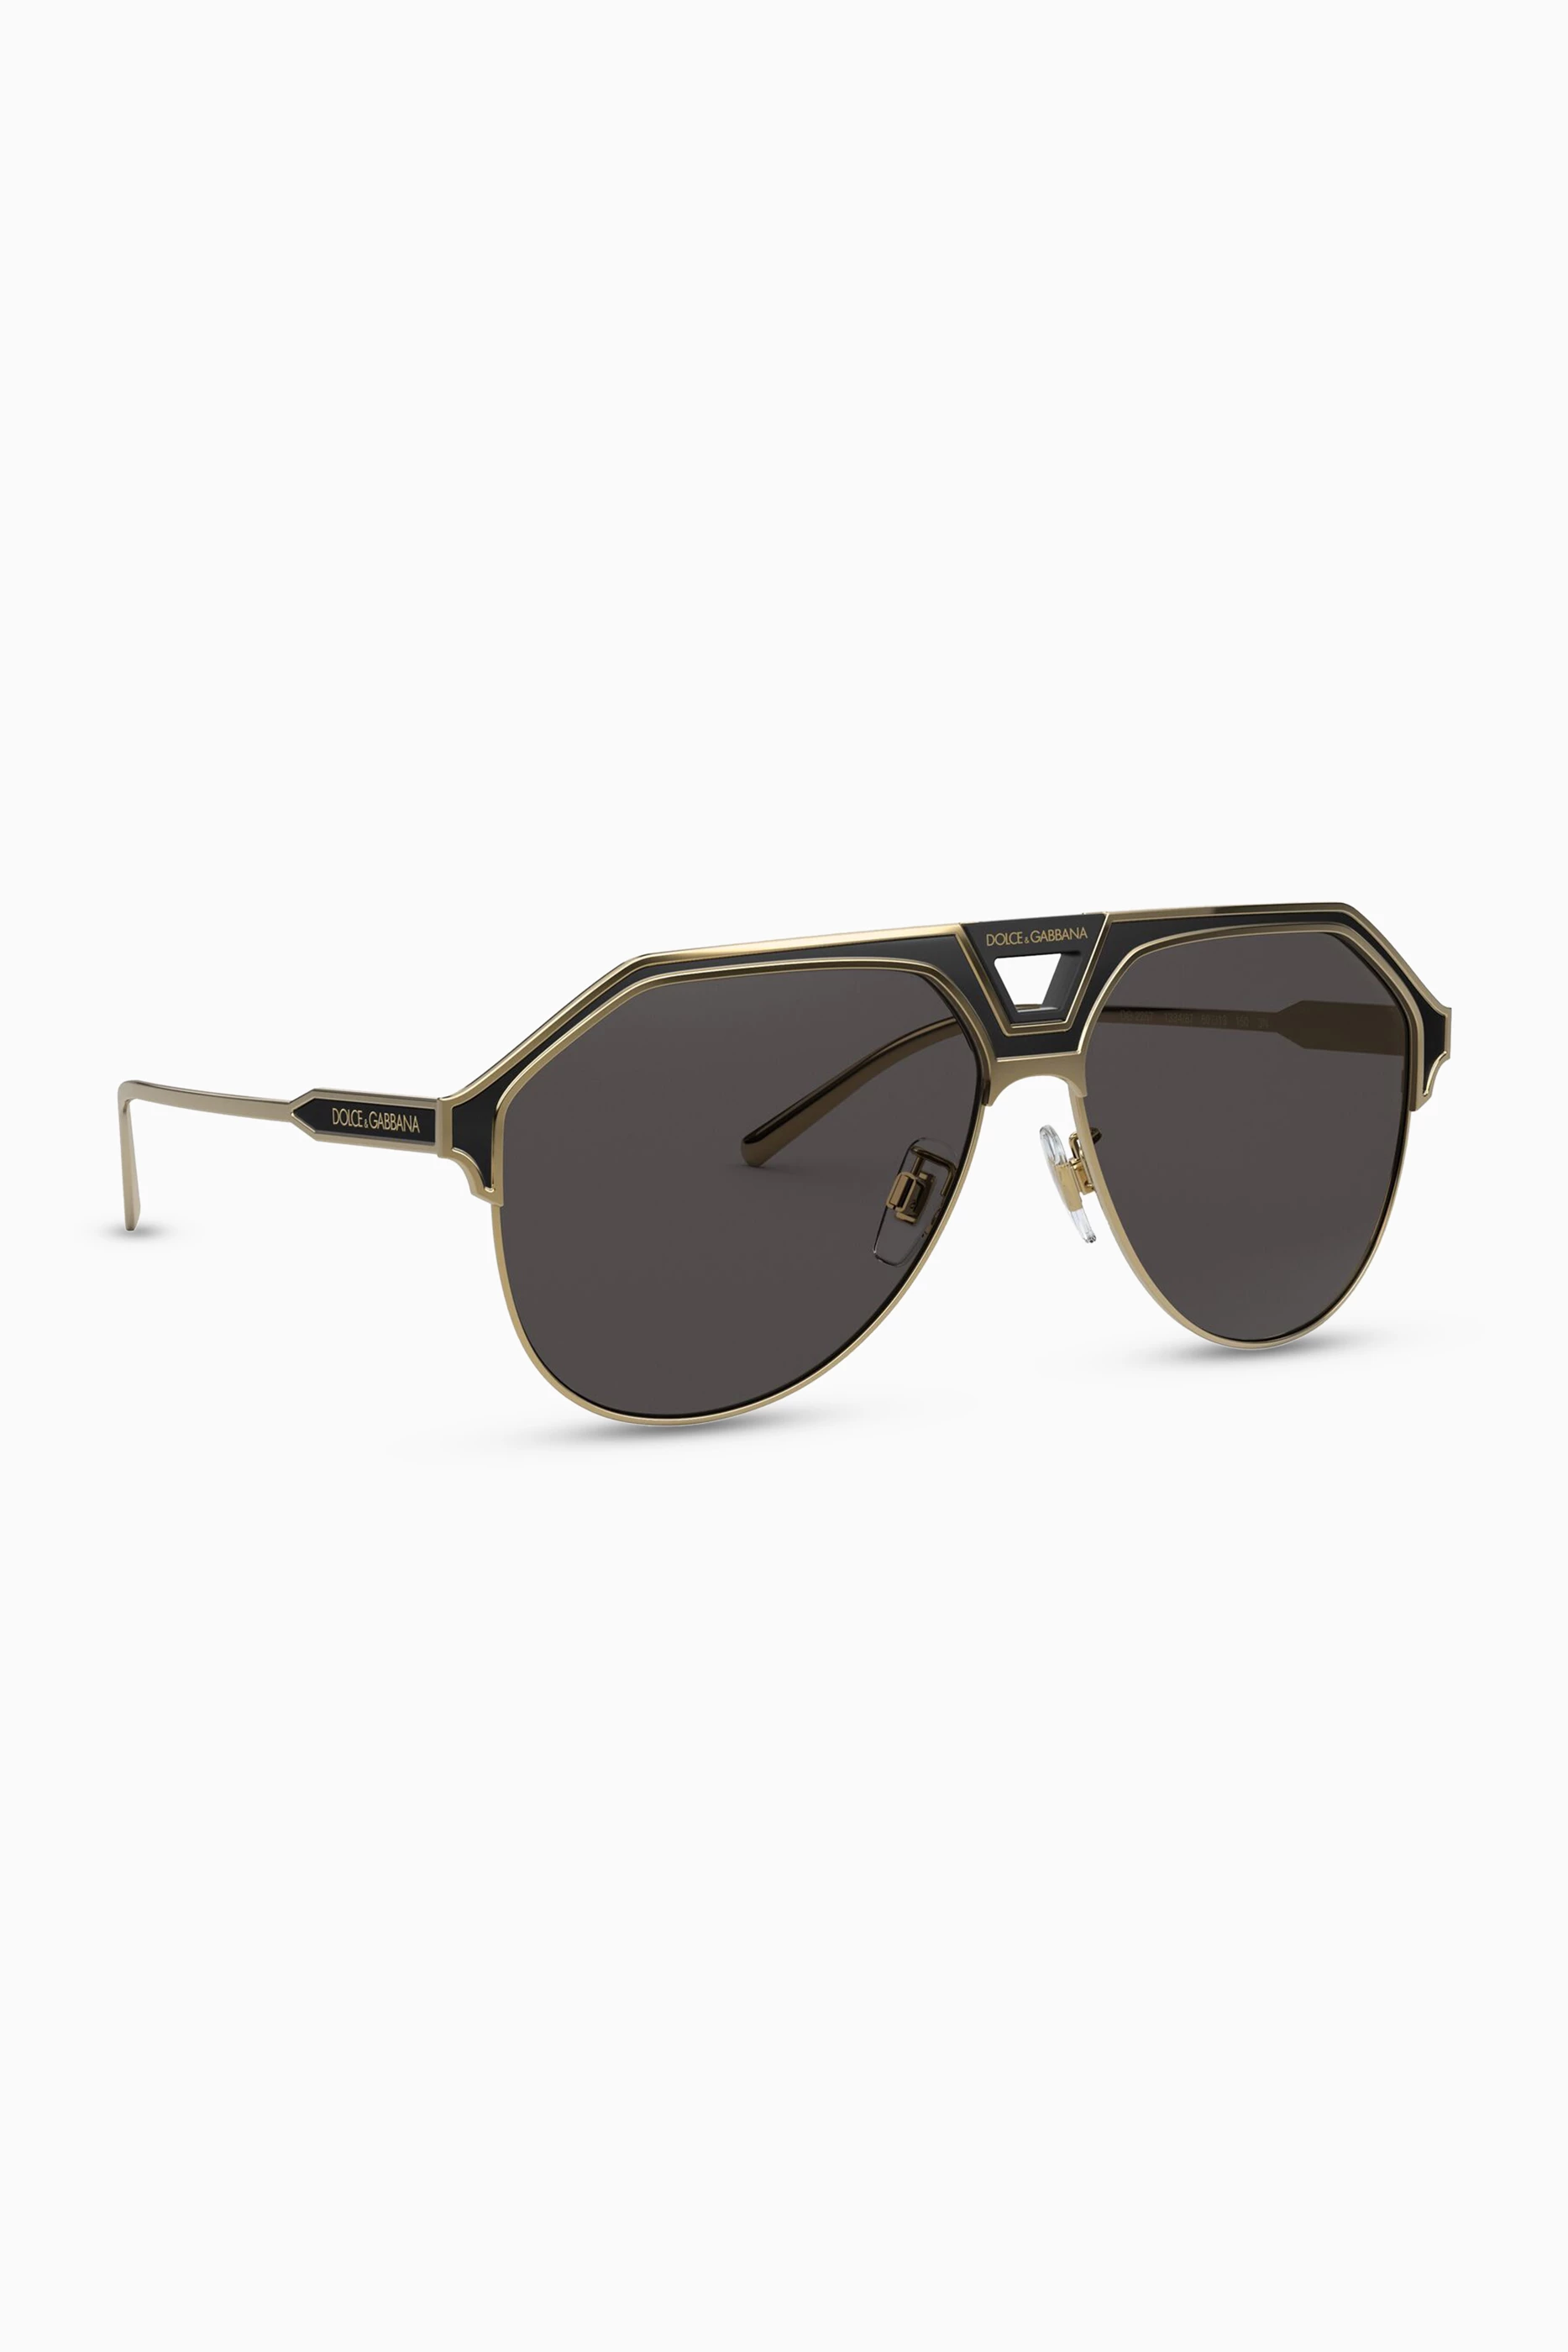 Shop Dolce & Gabbana Black Miami Aviator Sunglasses in Metal for MEN |  Ounass Saudi Arabia